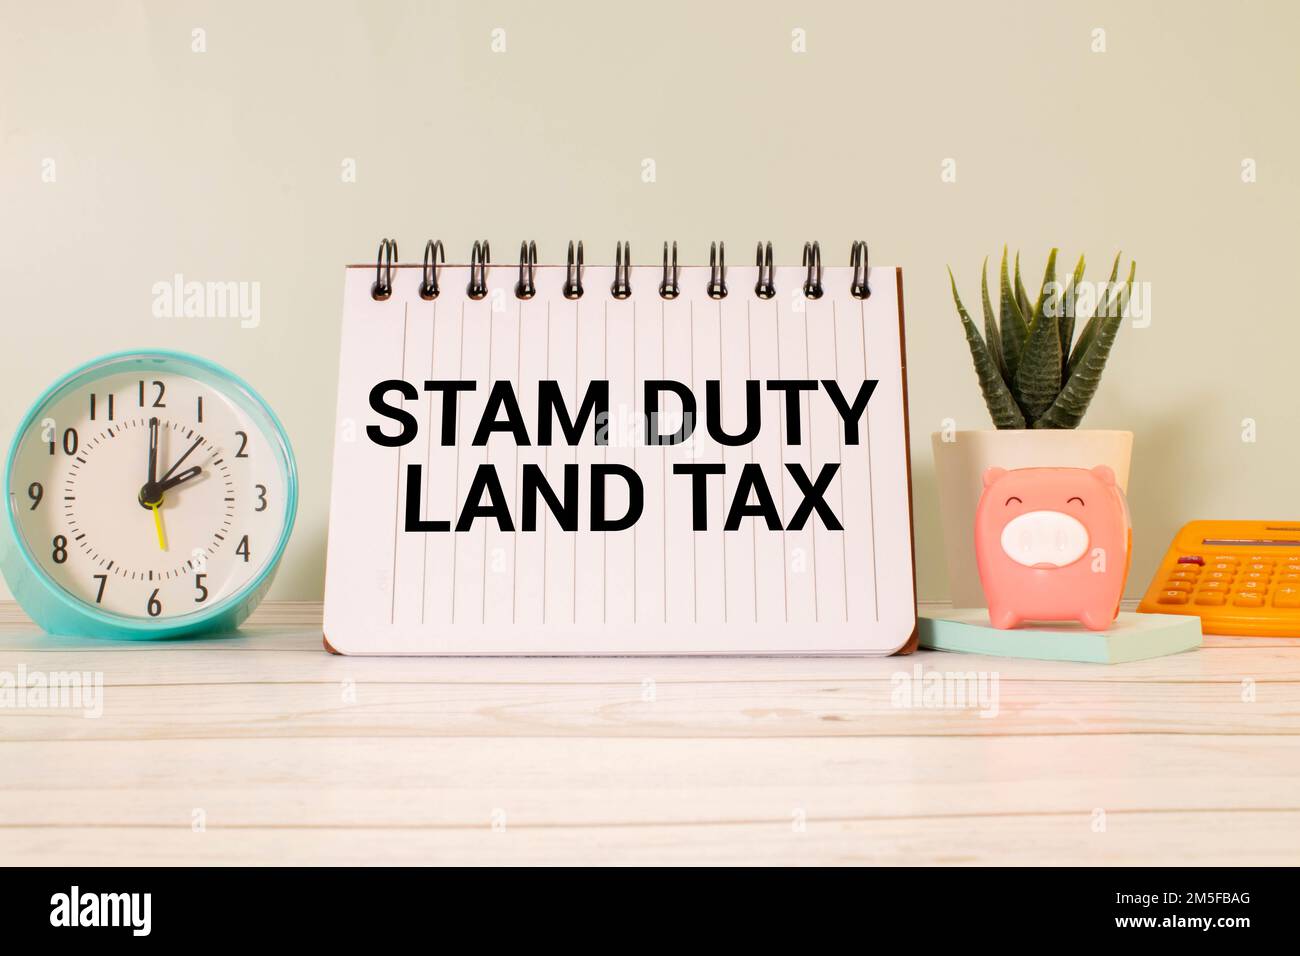 SDLT - Stamp Duty Land Tax write on a card on office desk. Stock Photo